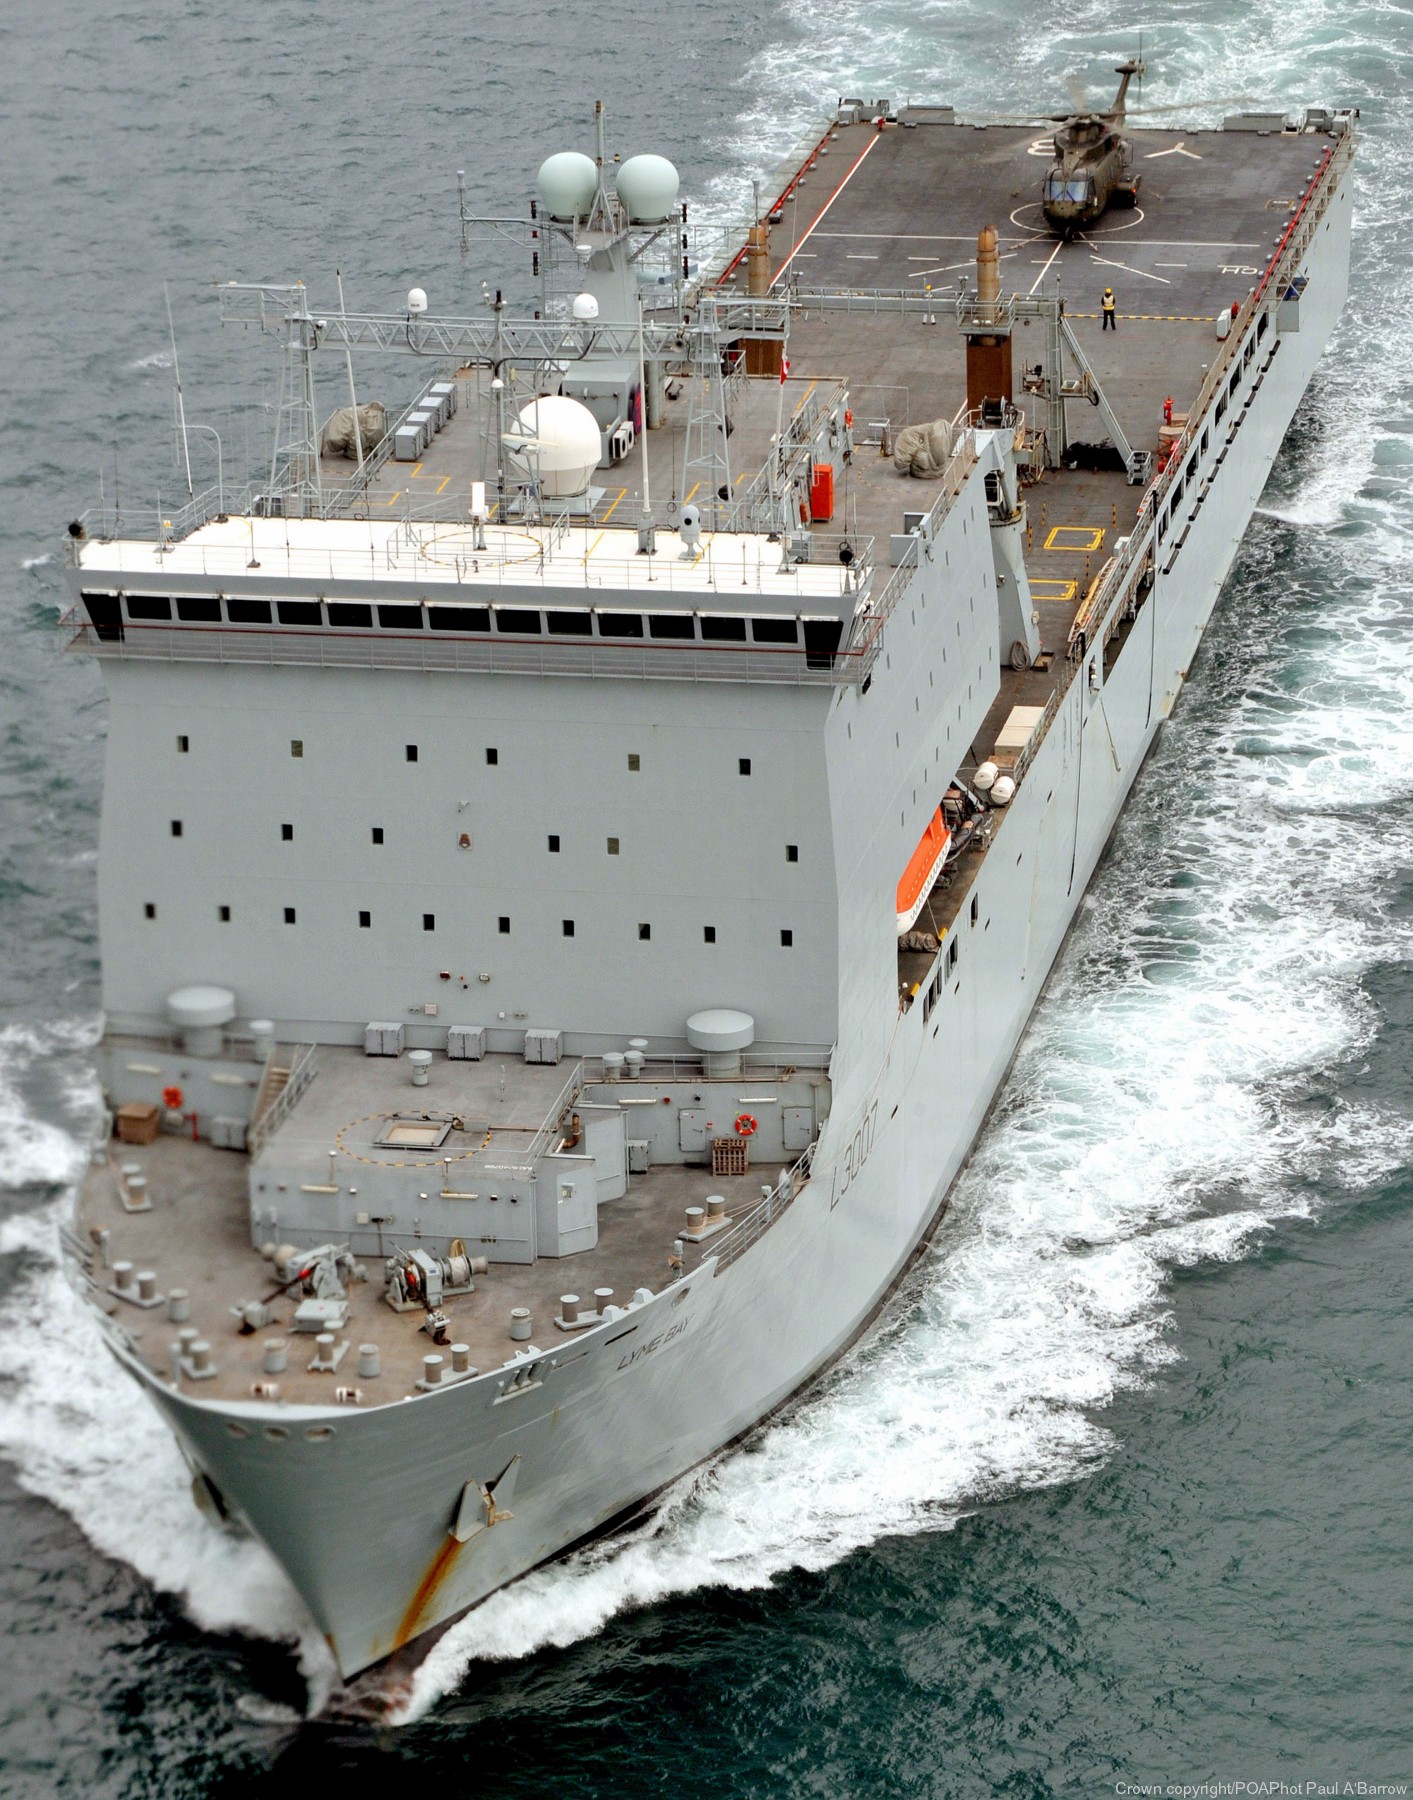 l-3007 rfa lyme bay dock landing ship royal fleet auxilary navy 39